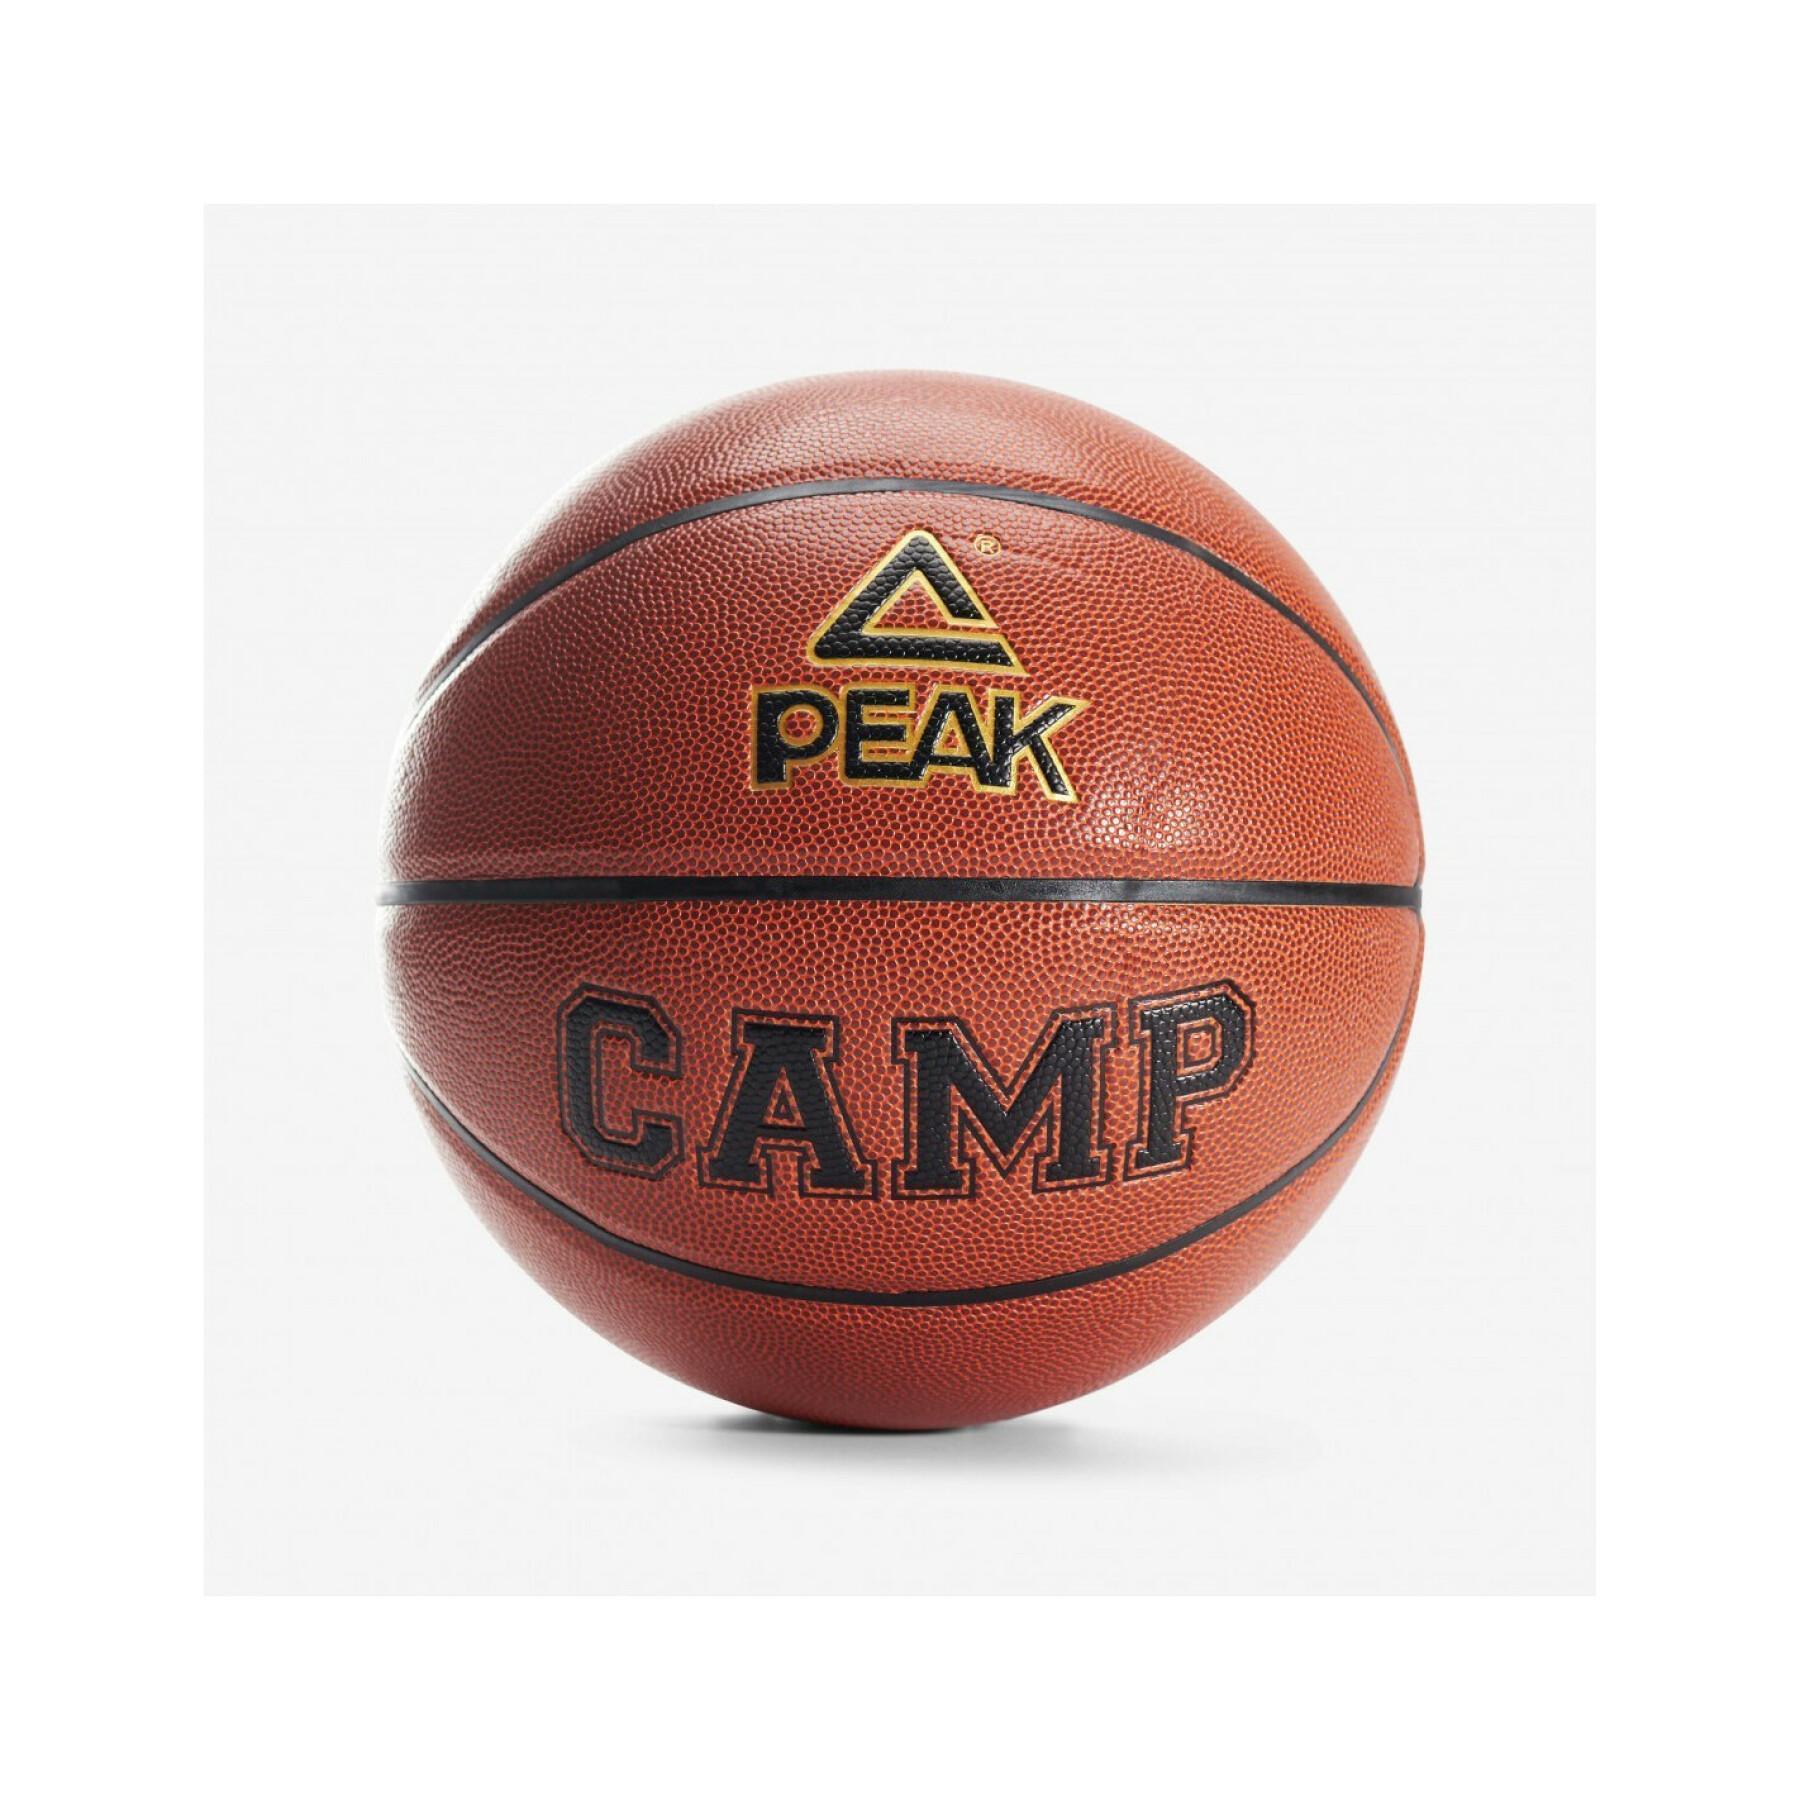 Ballon de basket ball Peak camp